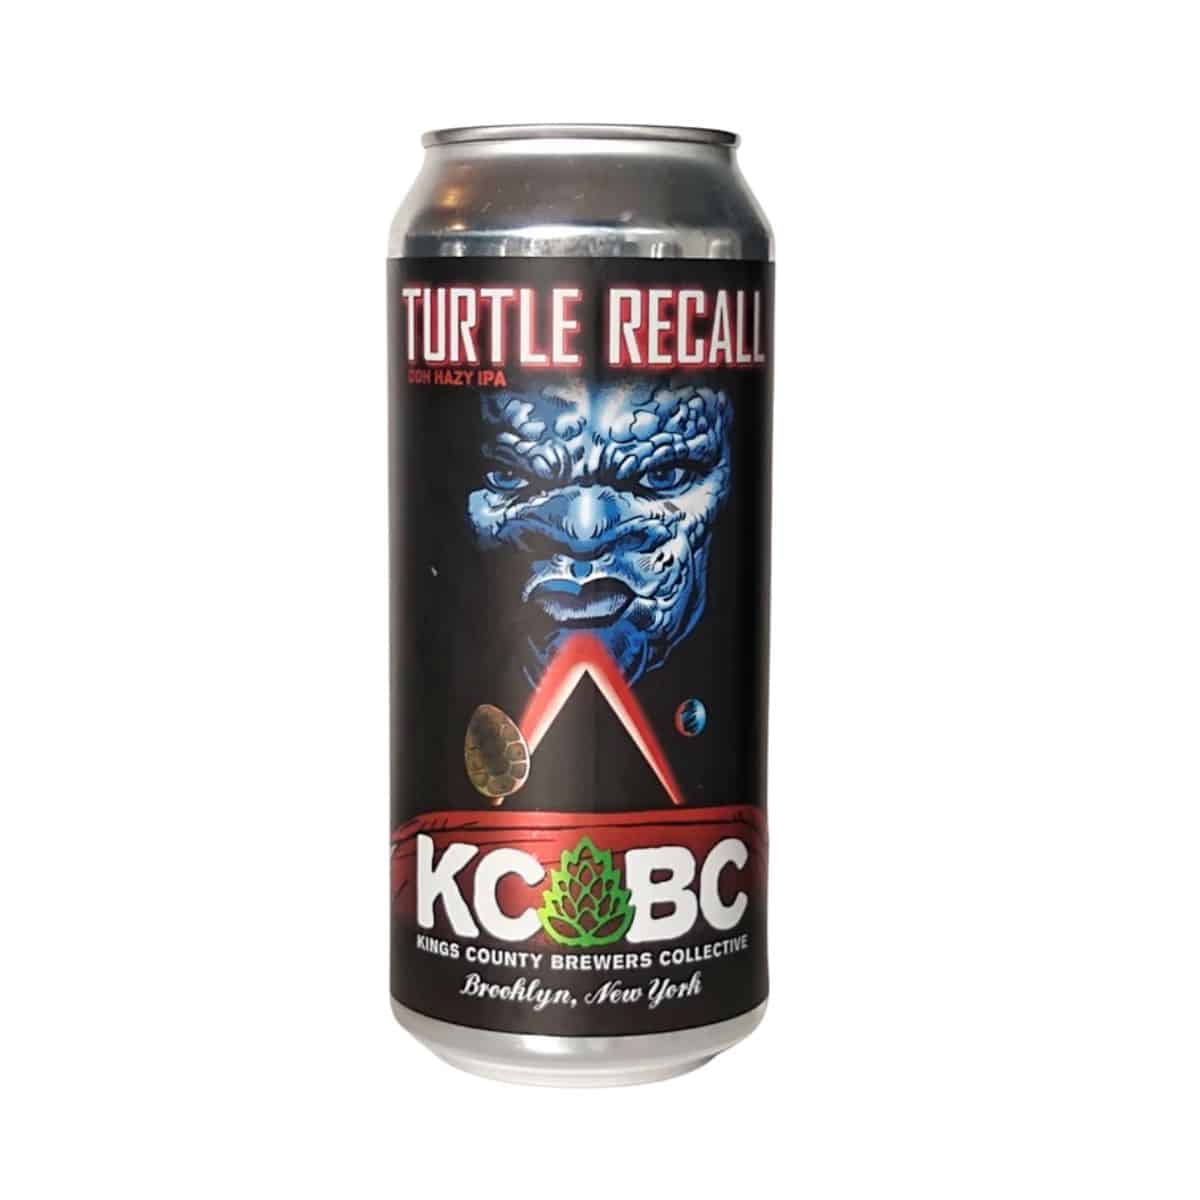 KCBC Turtle Recall